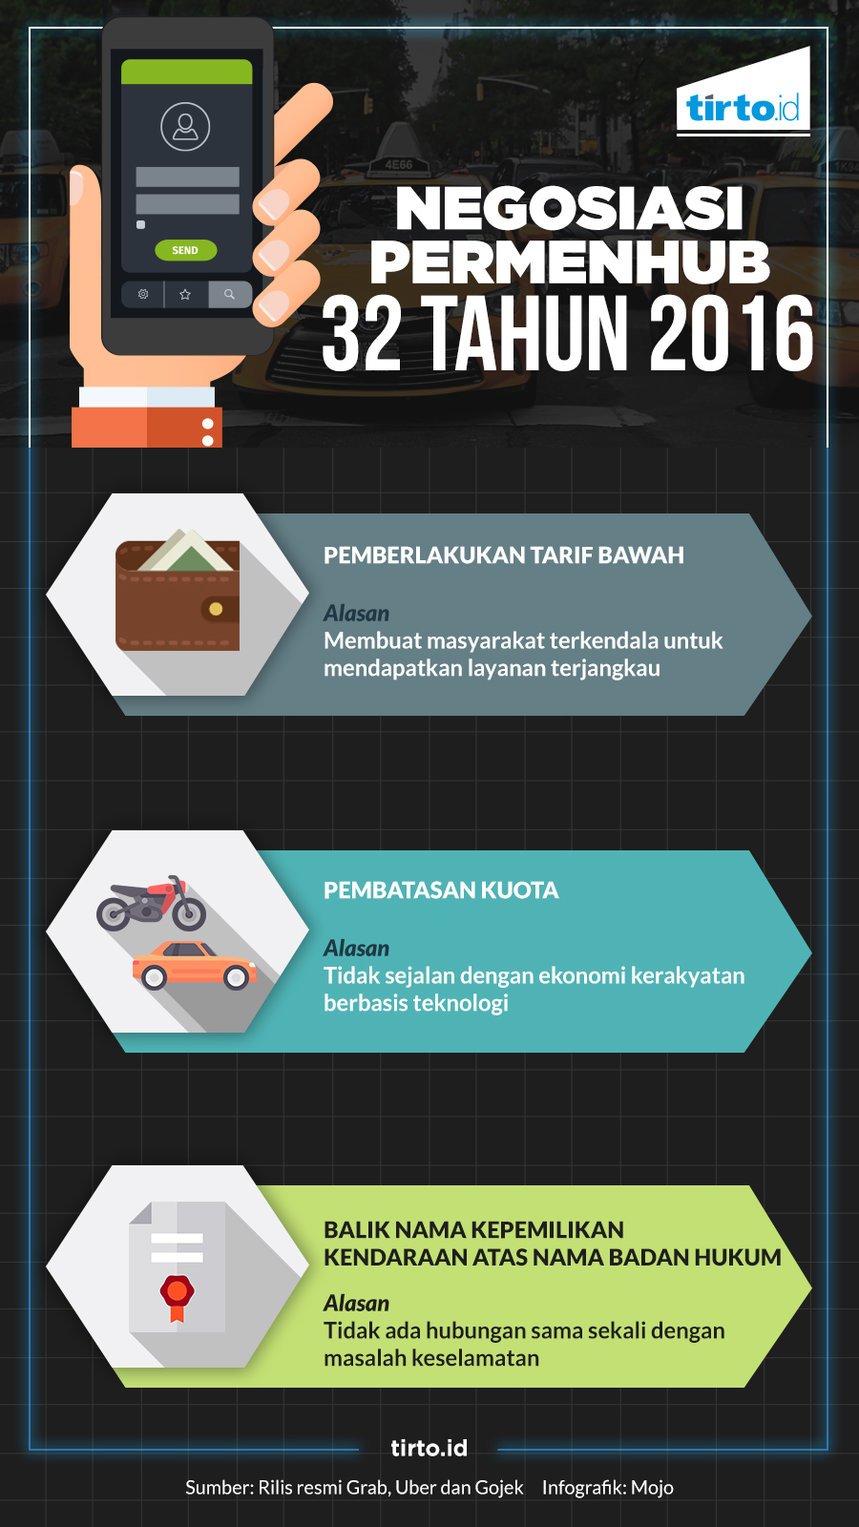 Infografik HL Transportasi Online